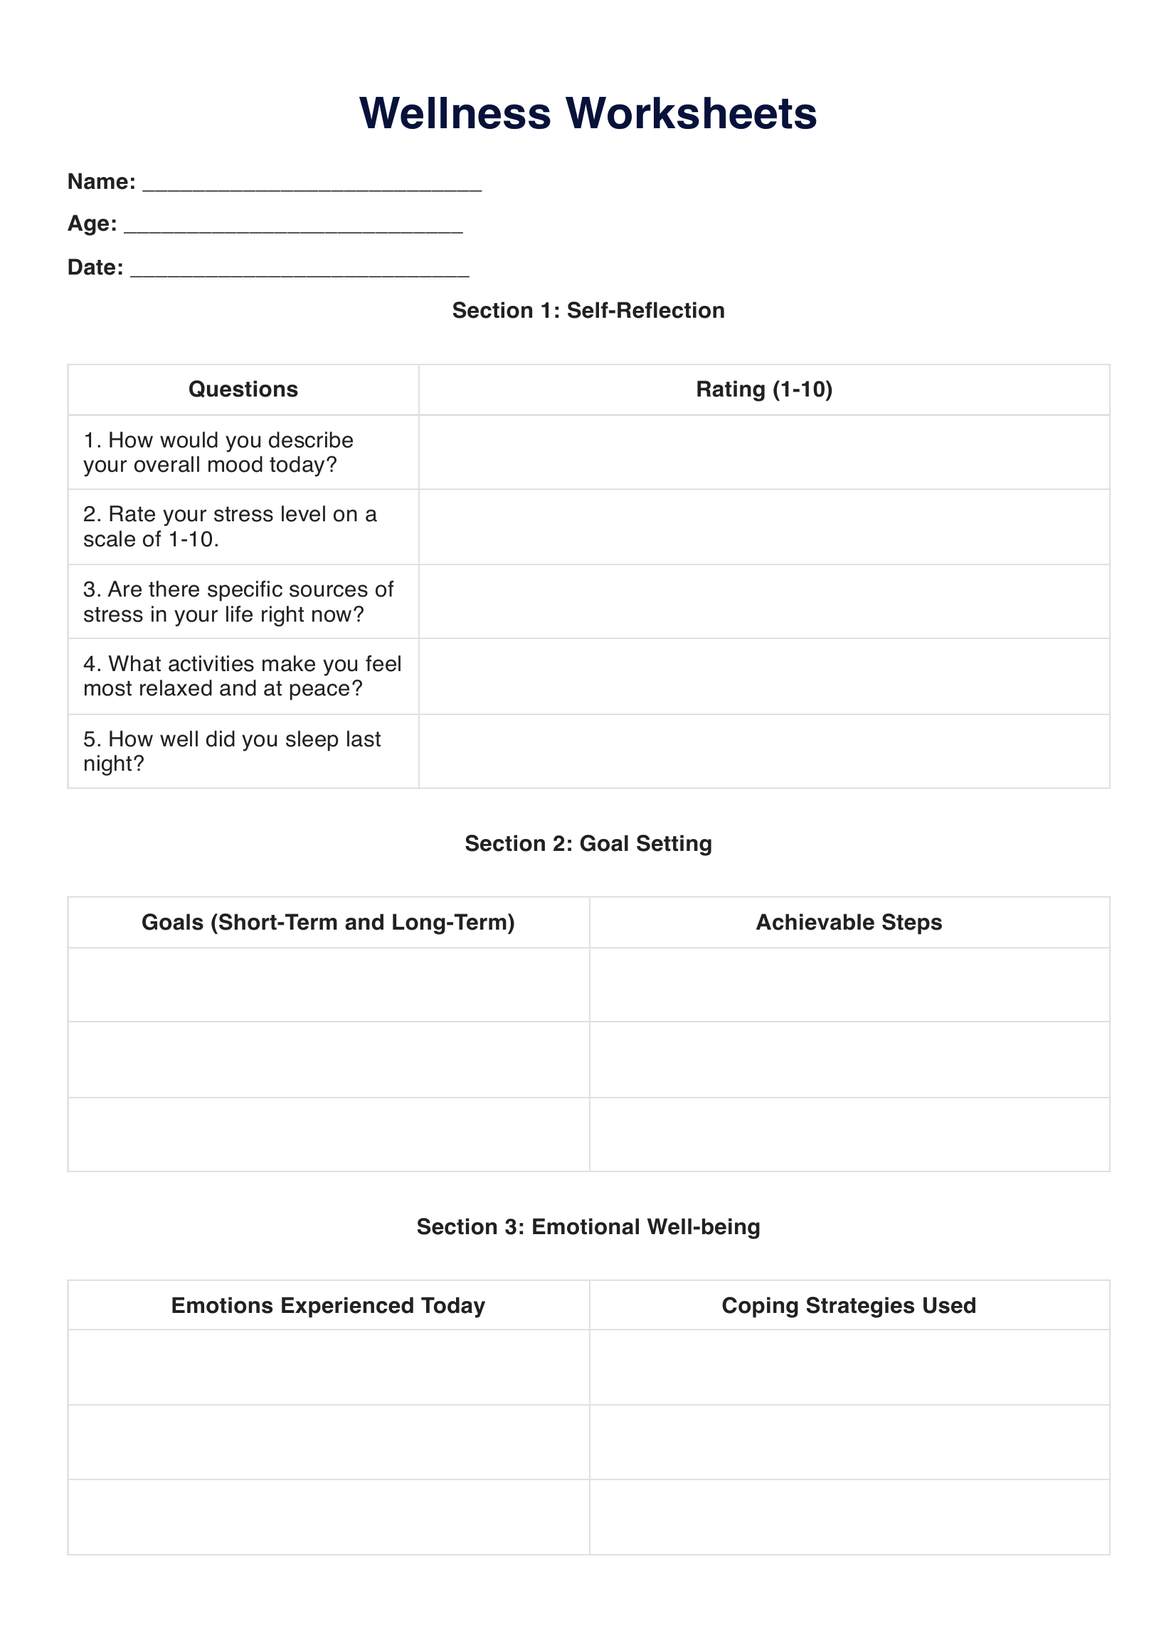 Wellness Worksheets PDF Example